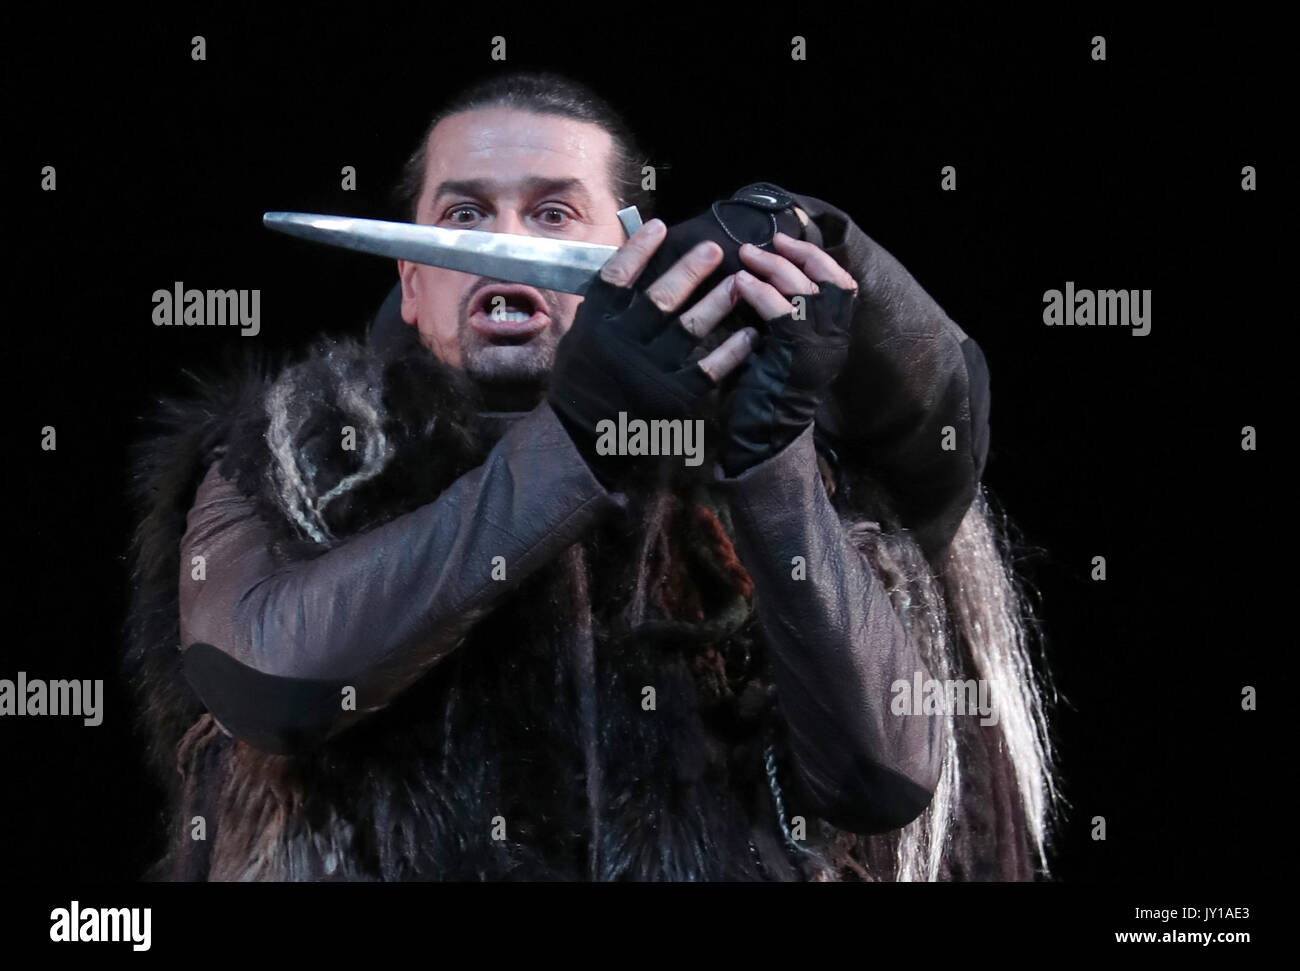 Dalibor Jenis as Macbeth on stage at the Festival Theatre in Verdi's dark operatic thriller Macbeth during the 2017 Edinburgh International Festival. Stock Photo